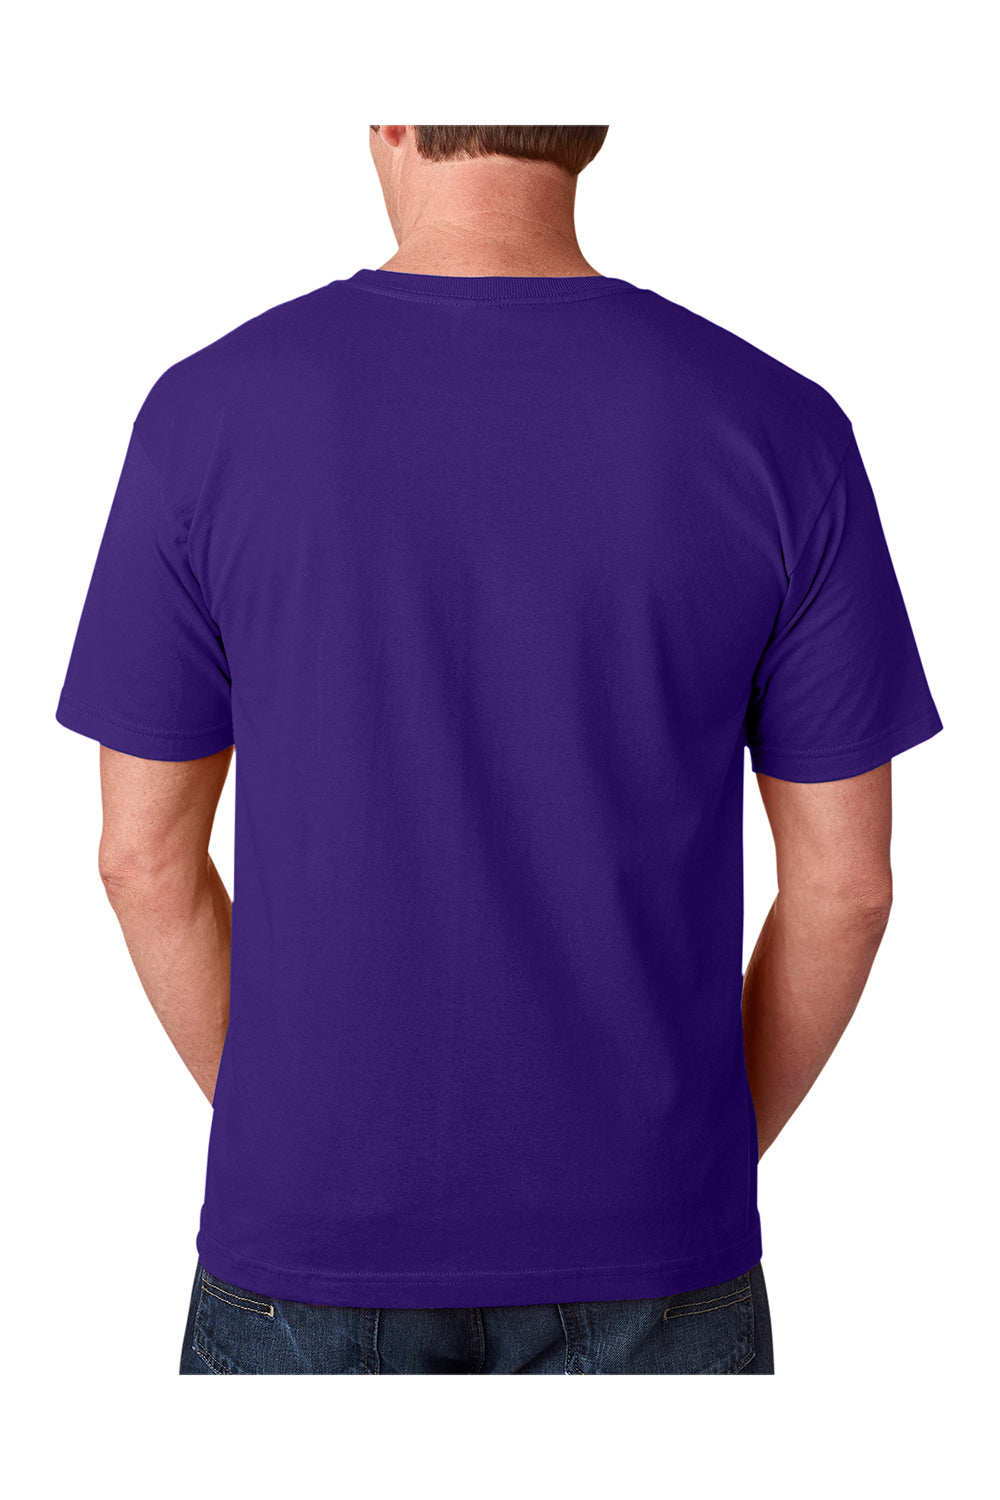 Bayside BA5040 Mens USA Made Short Sleeve Crewneck T-Shirt Purple Model Back